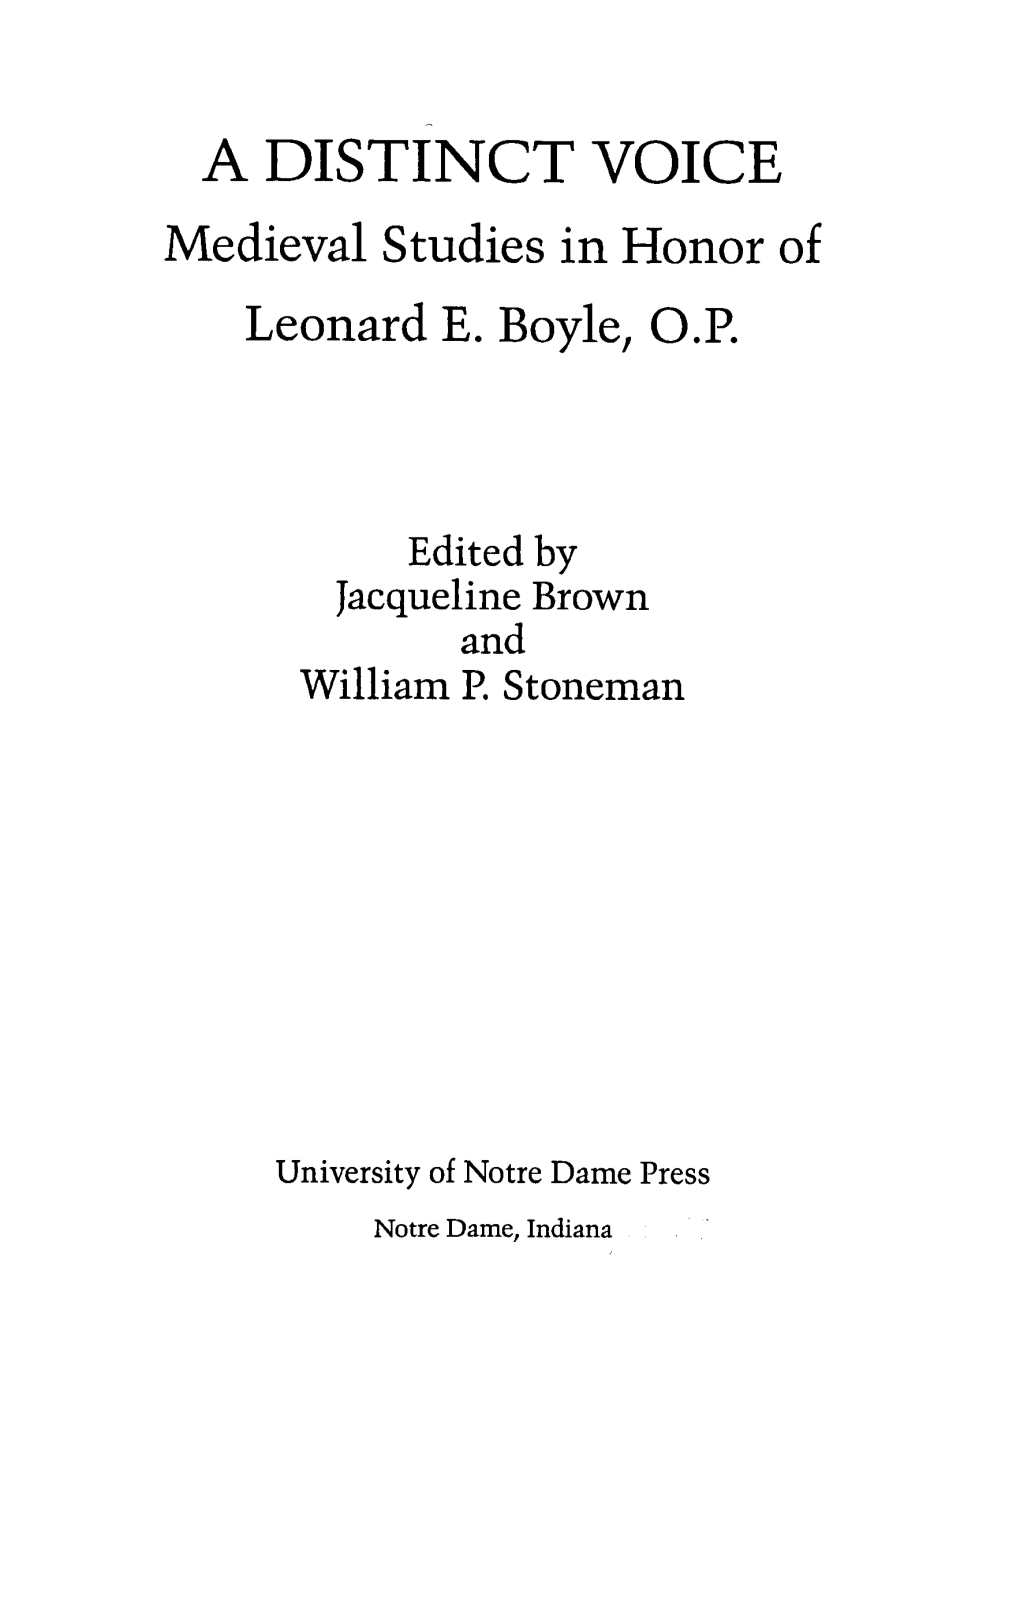 A DISTINCT VOICE Medieval Studies in Honor of Leonard E